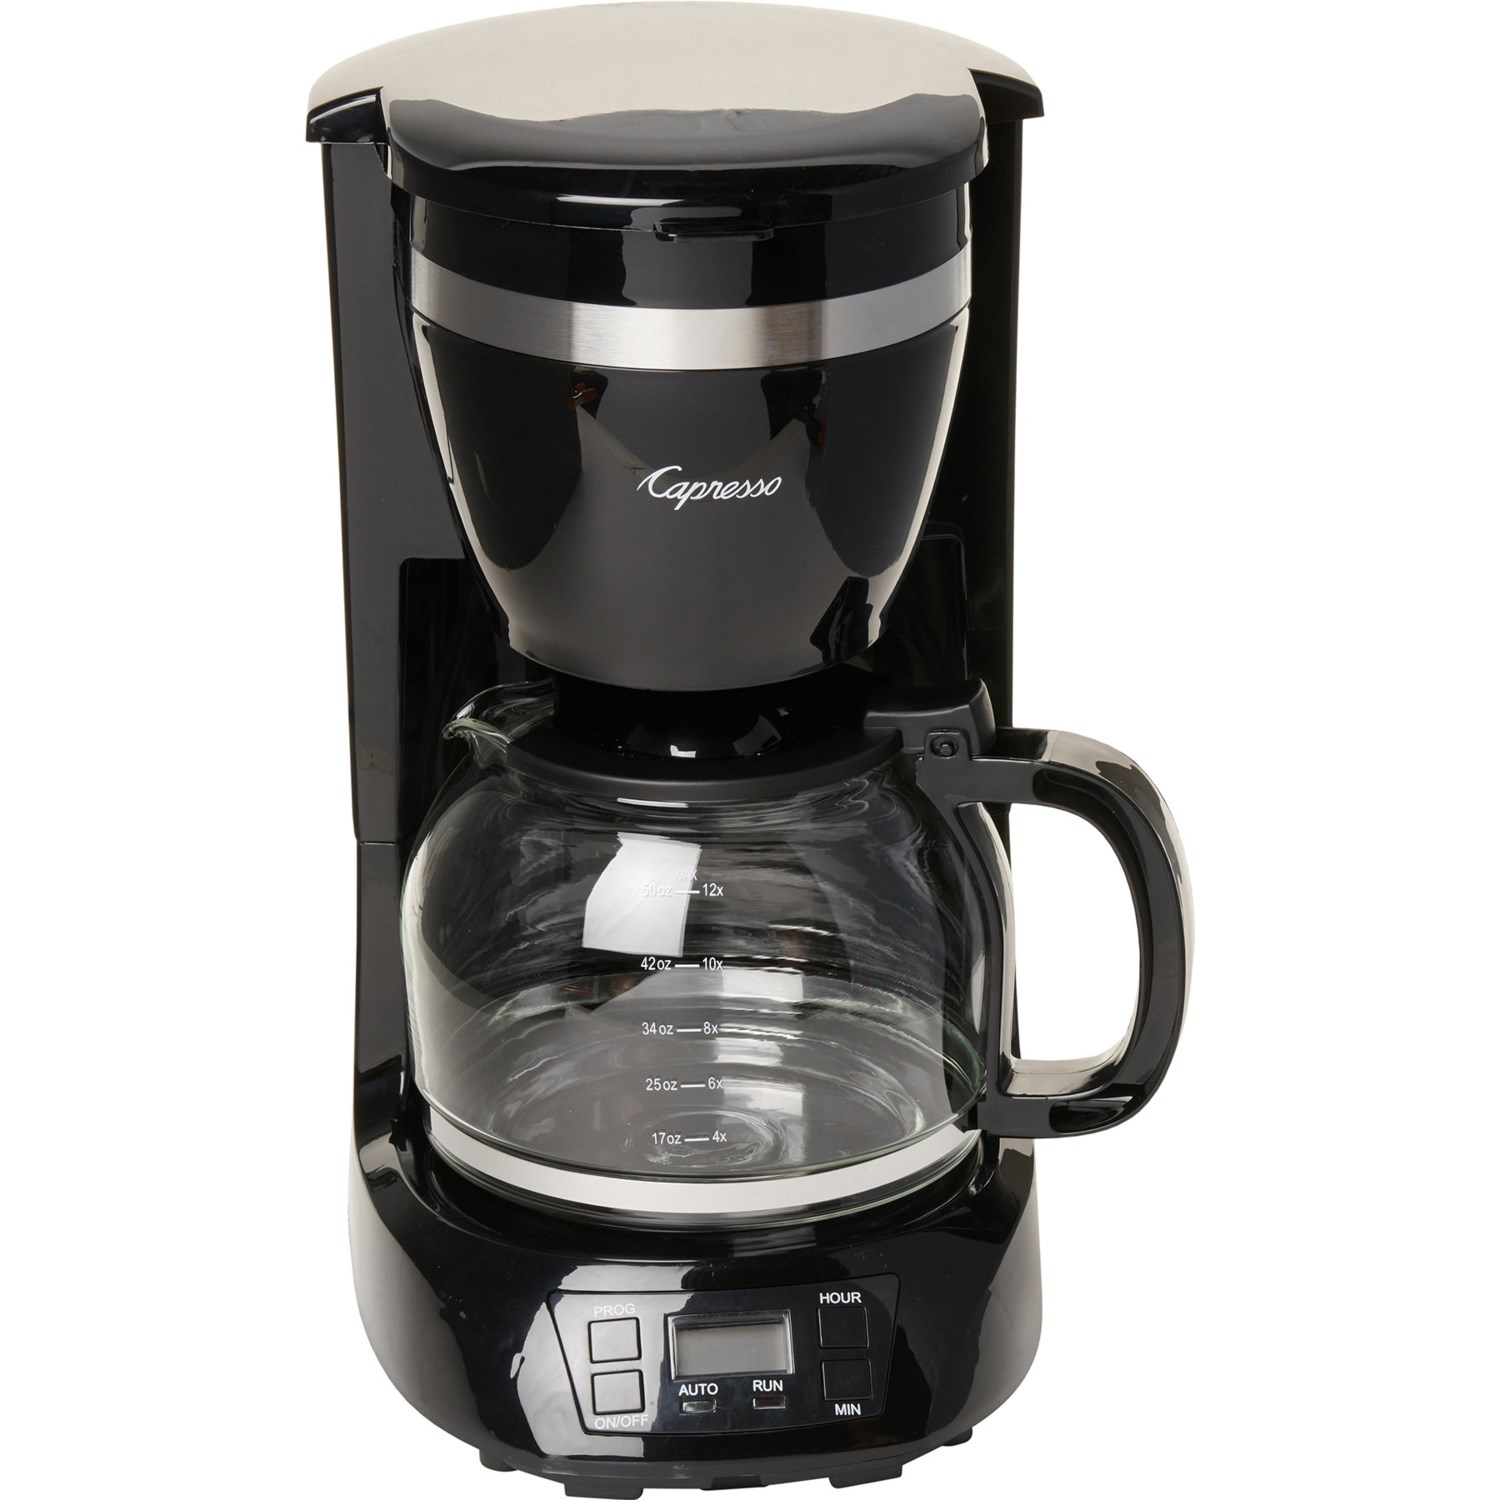 https://i.stpost.com/capresso-12-cup-drip-coffee-maker-in-black-stainless-steel~p~3ckvp_01~1500.3.jpg